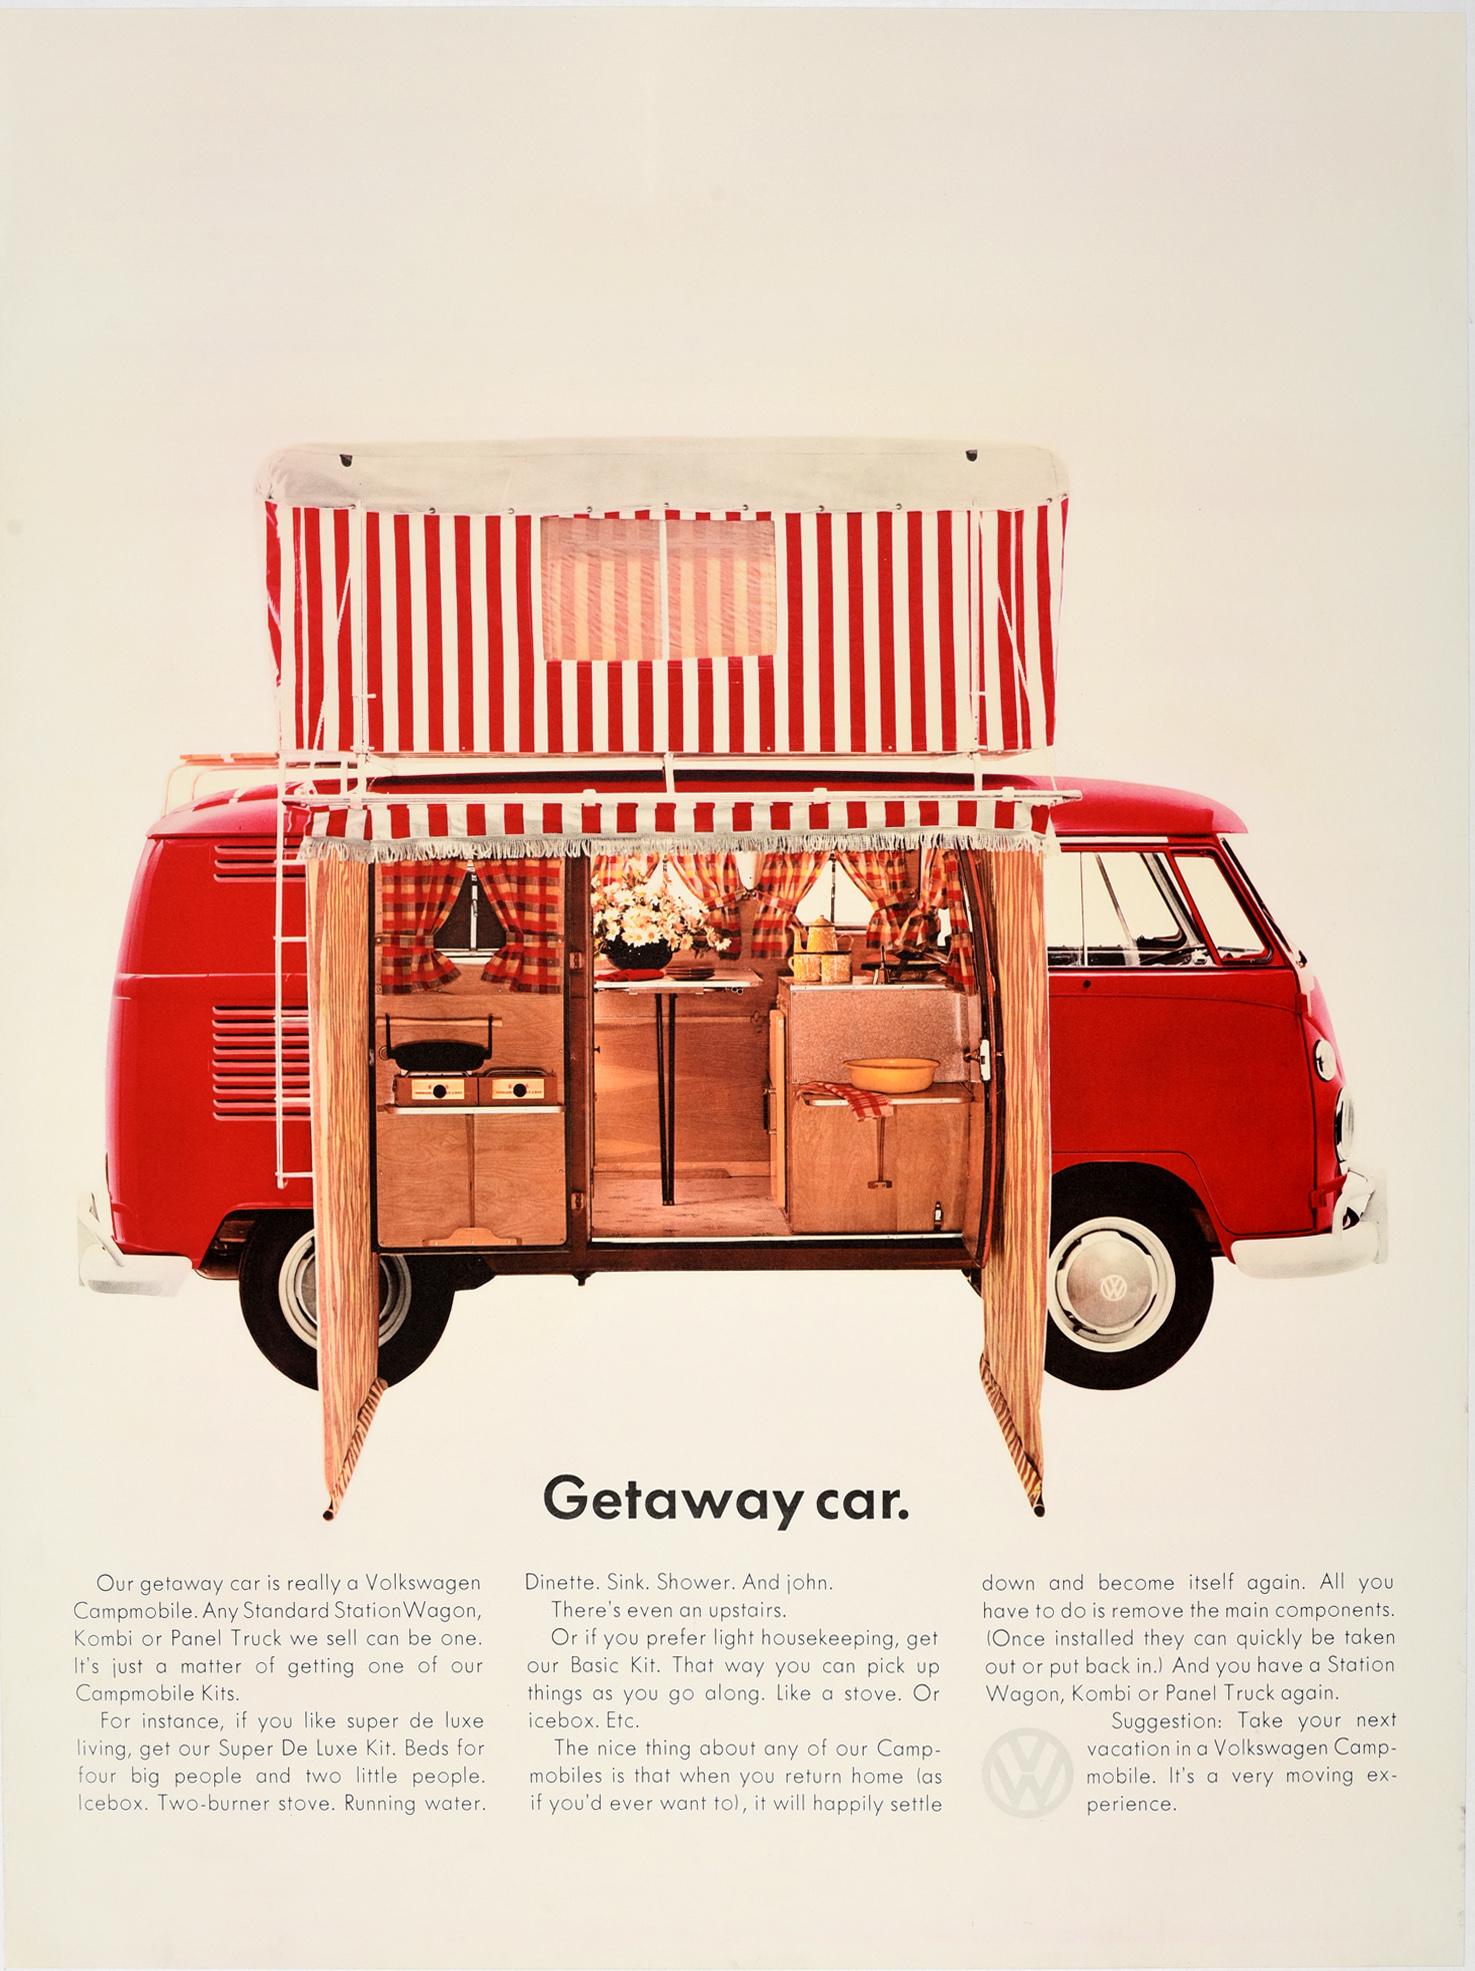 Unknown Print - Original Vintage Volkswagen Poster Getaway Car VW Campmobile Station Wagon Kombi